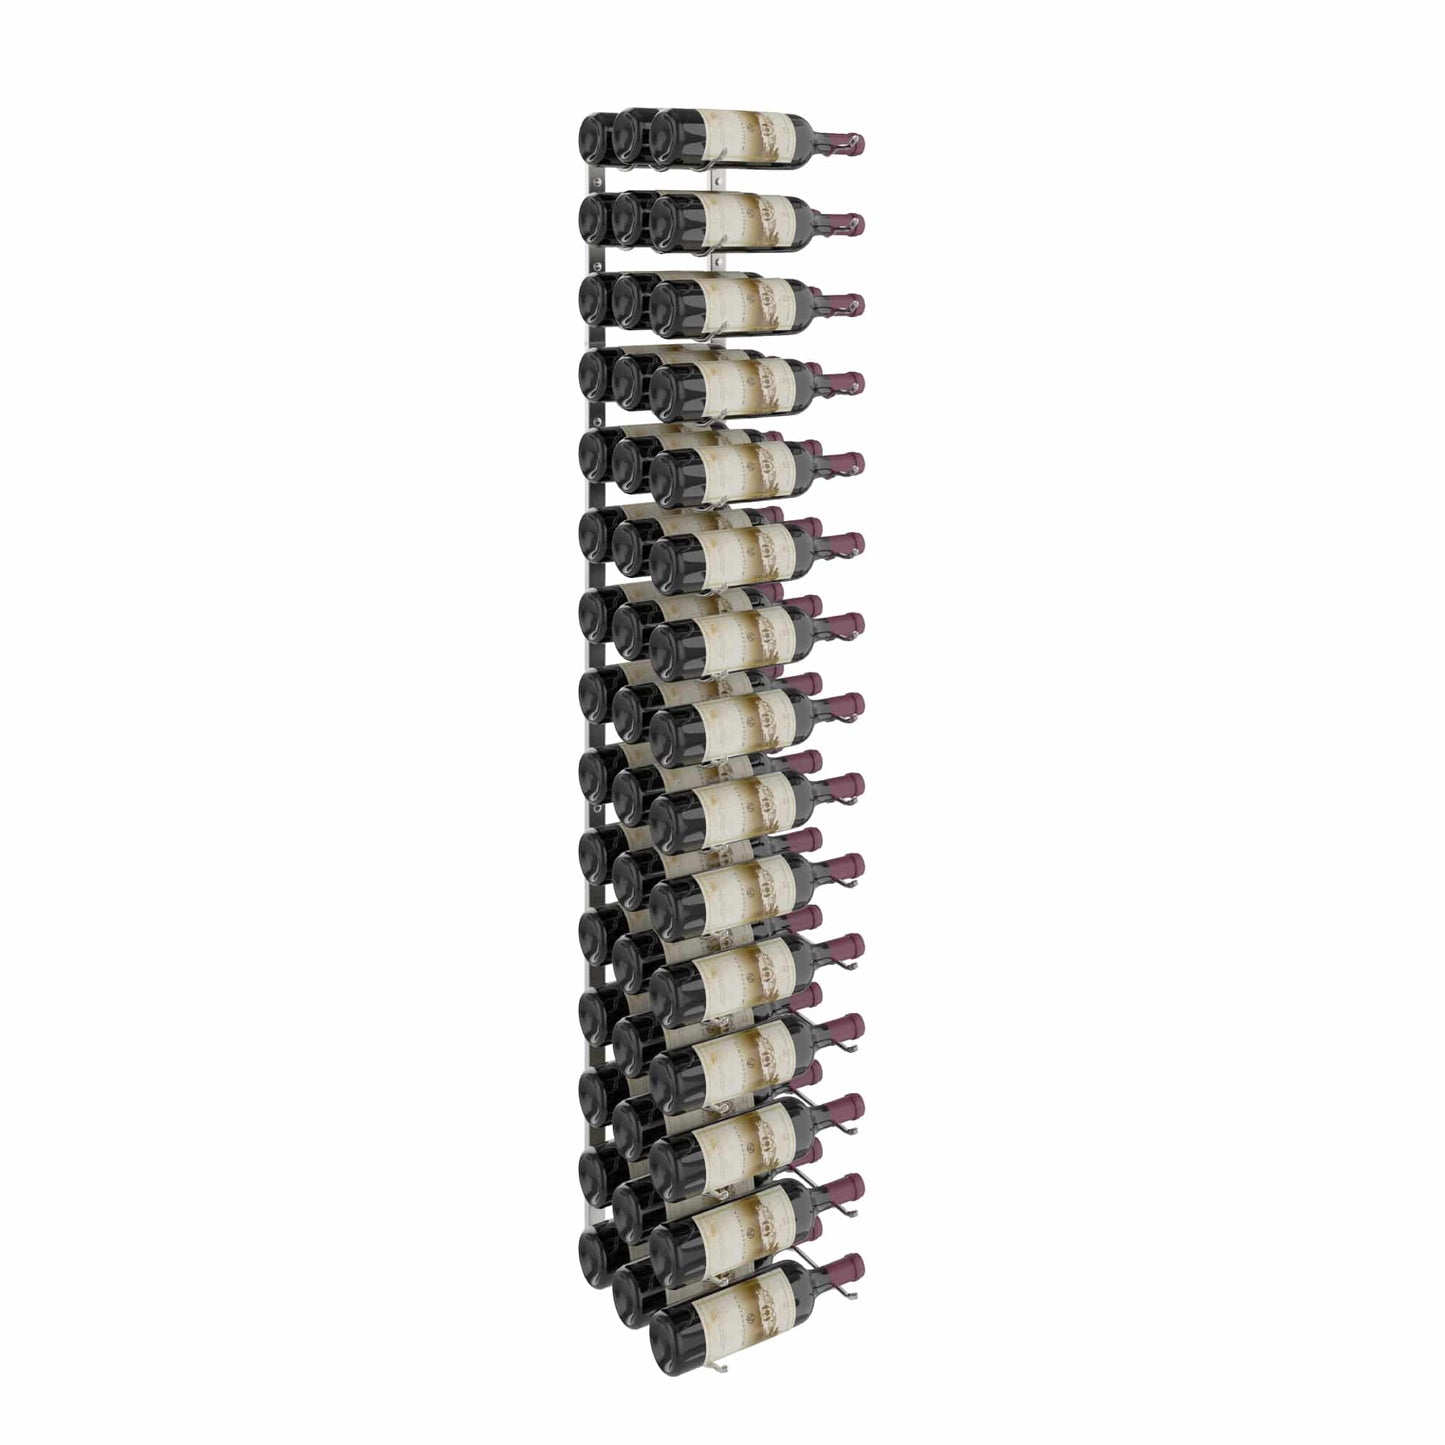 W Series Luxe 6 - Wall Mounted Metal Wine Rack Storage Kit